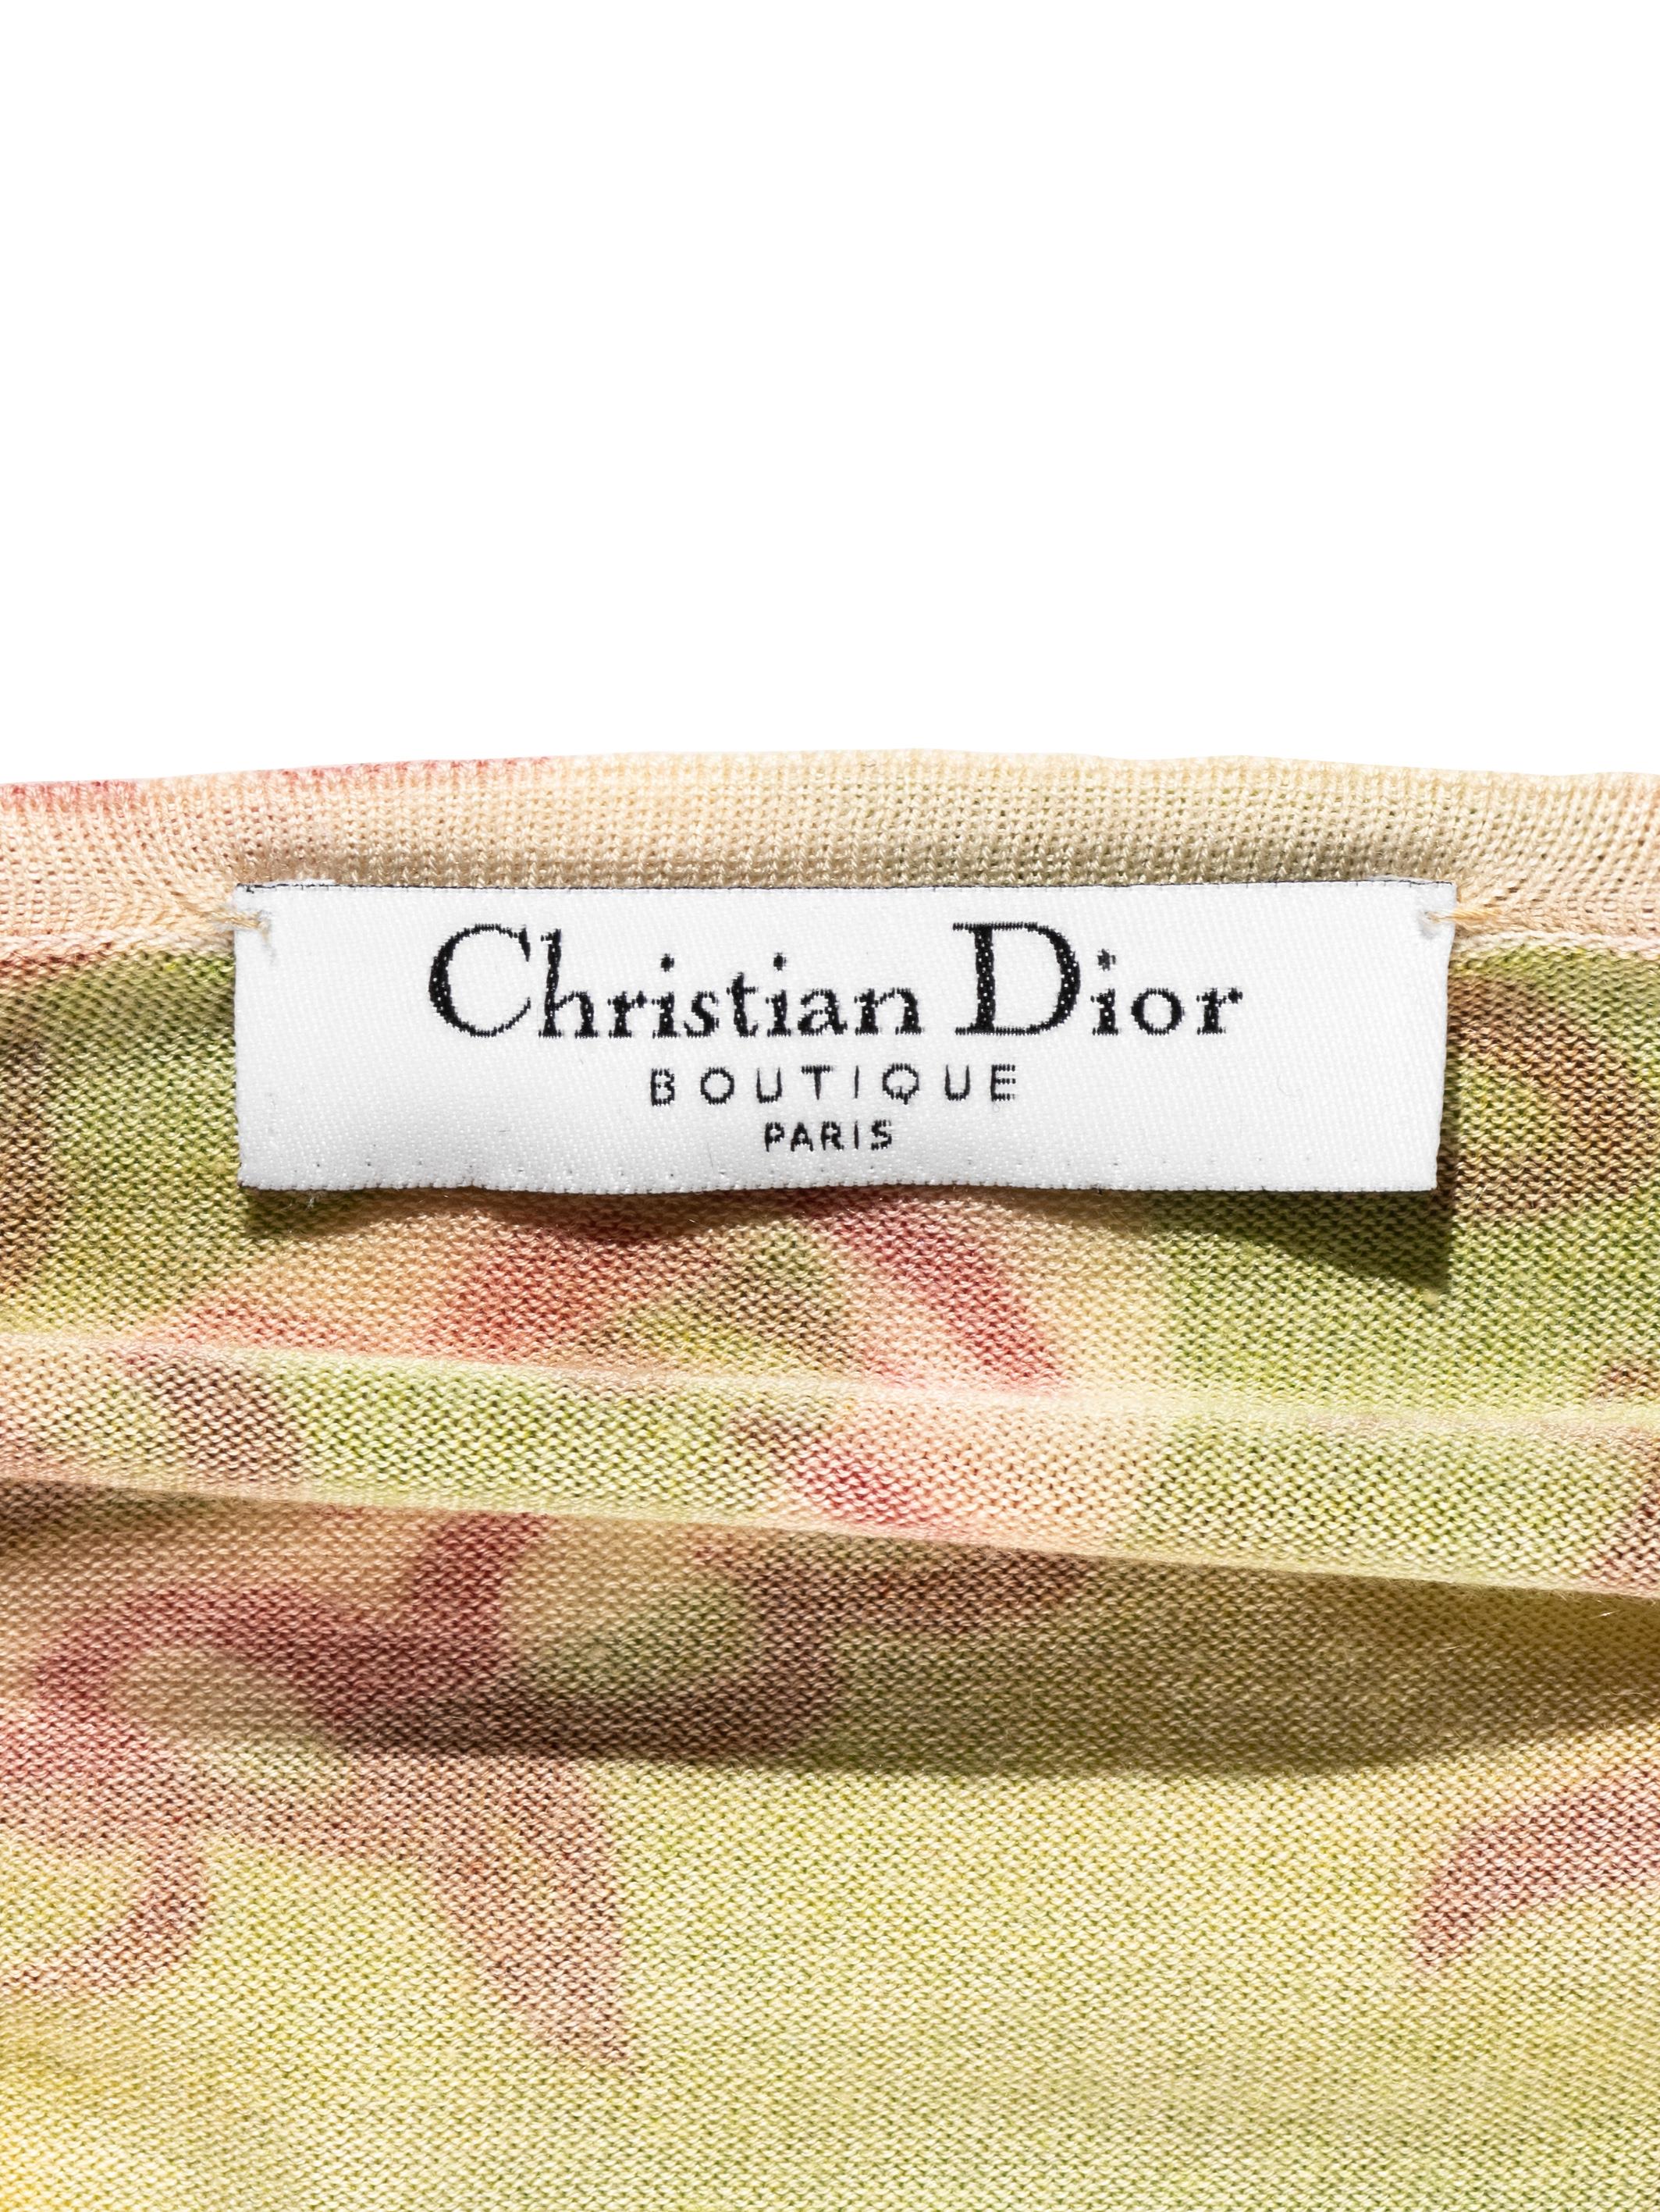 Christian Dior by John Galliano graffiti print cardigan and mini skirt, ss 2003 7